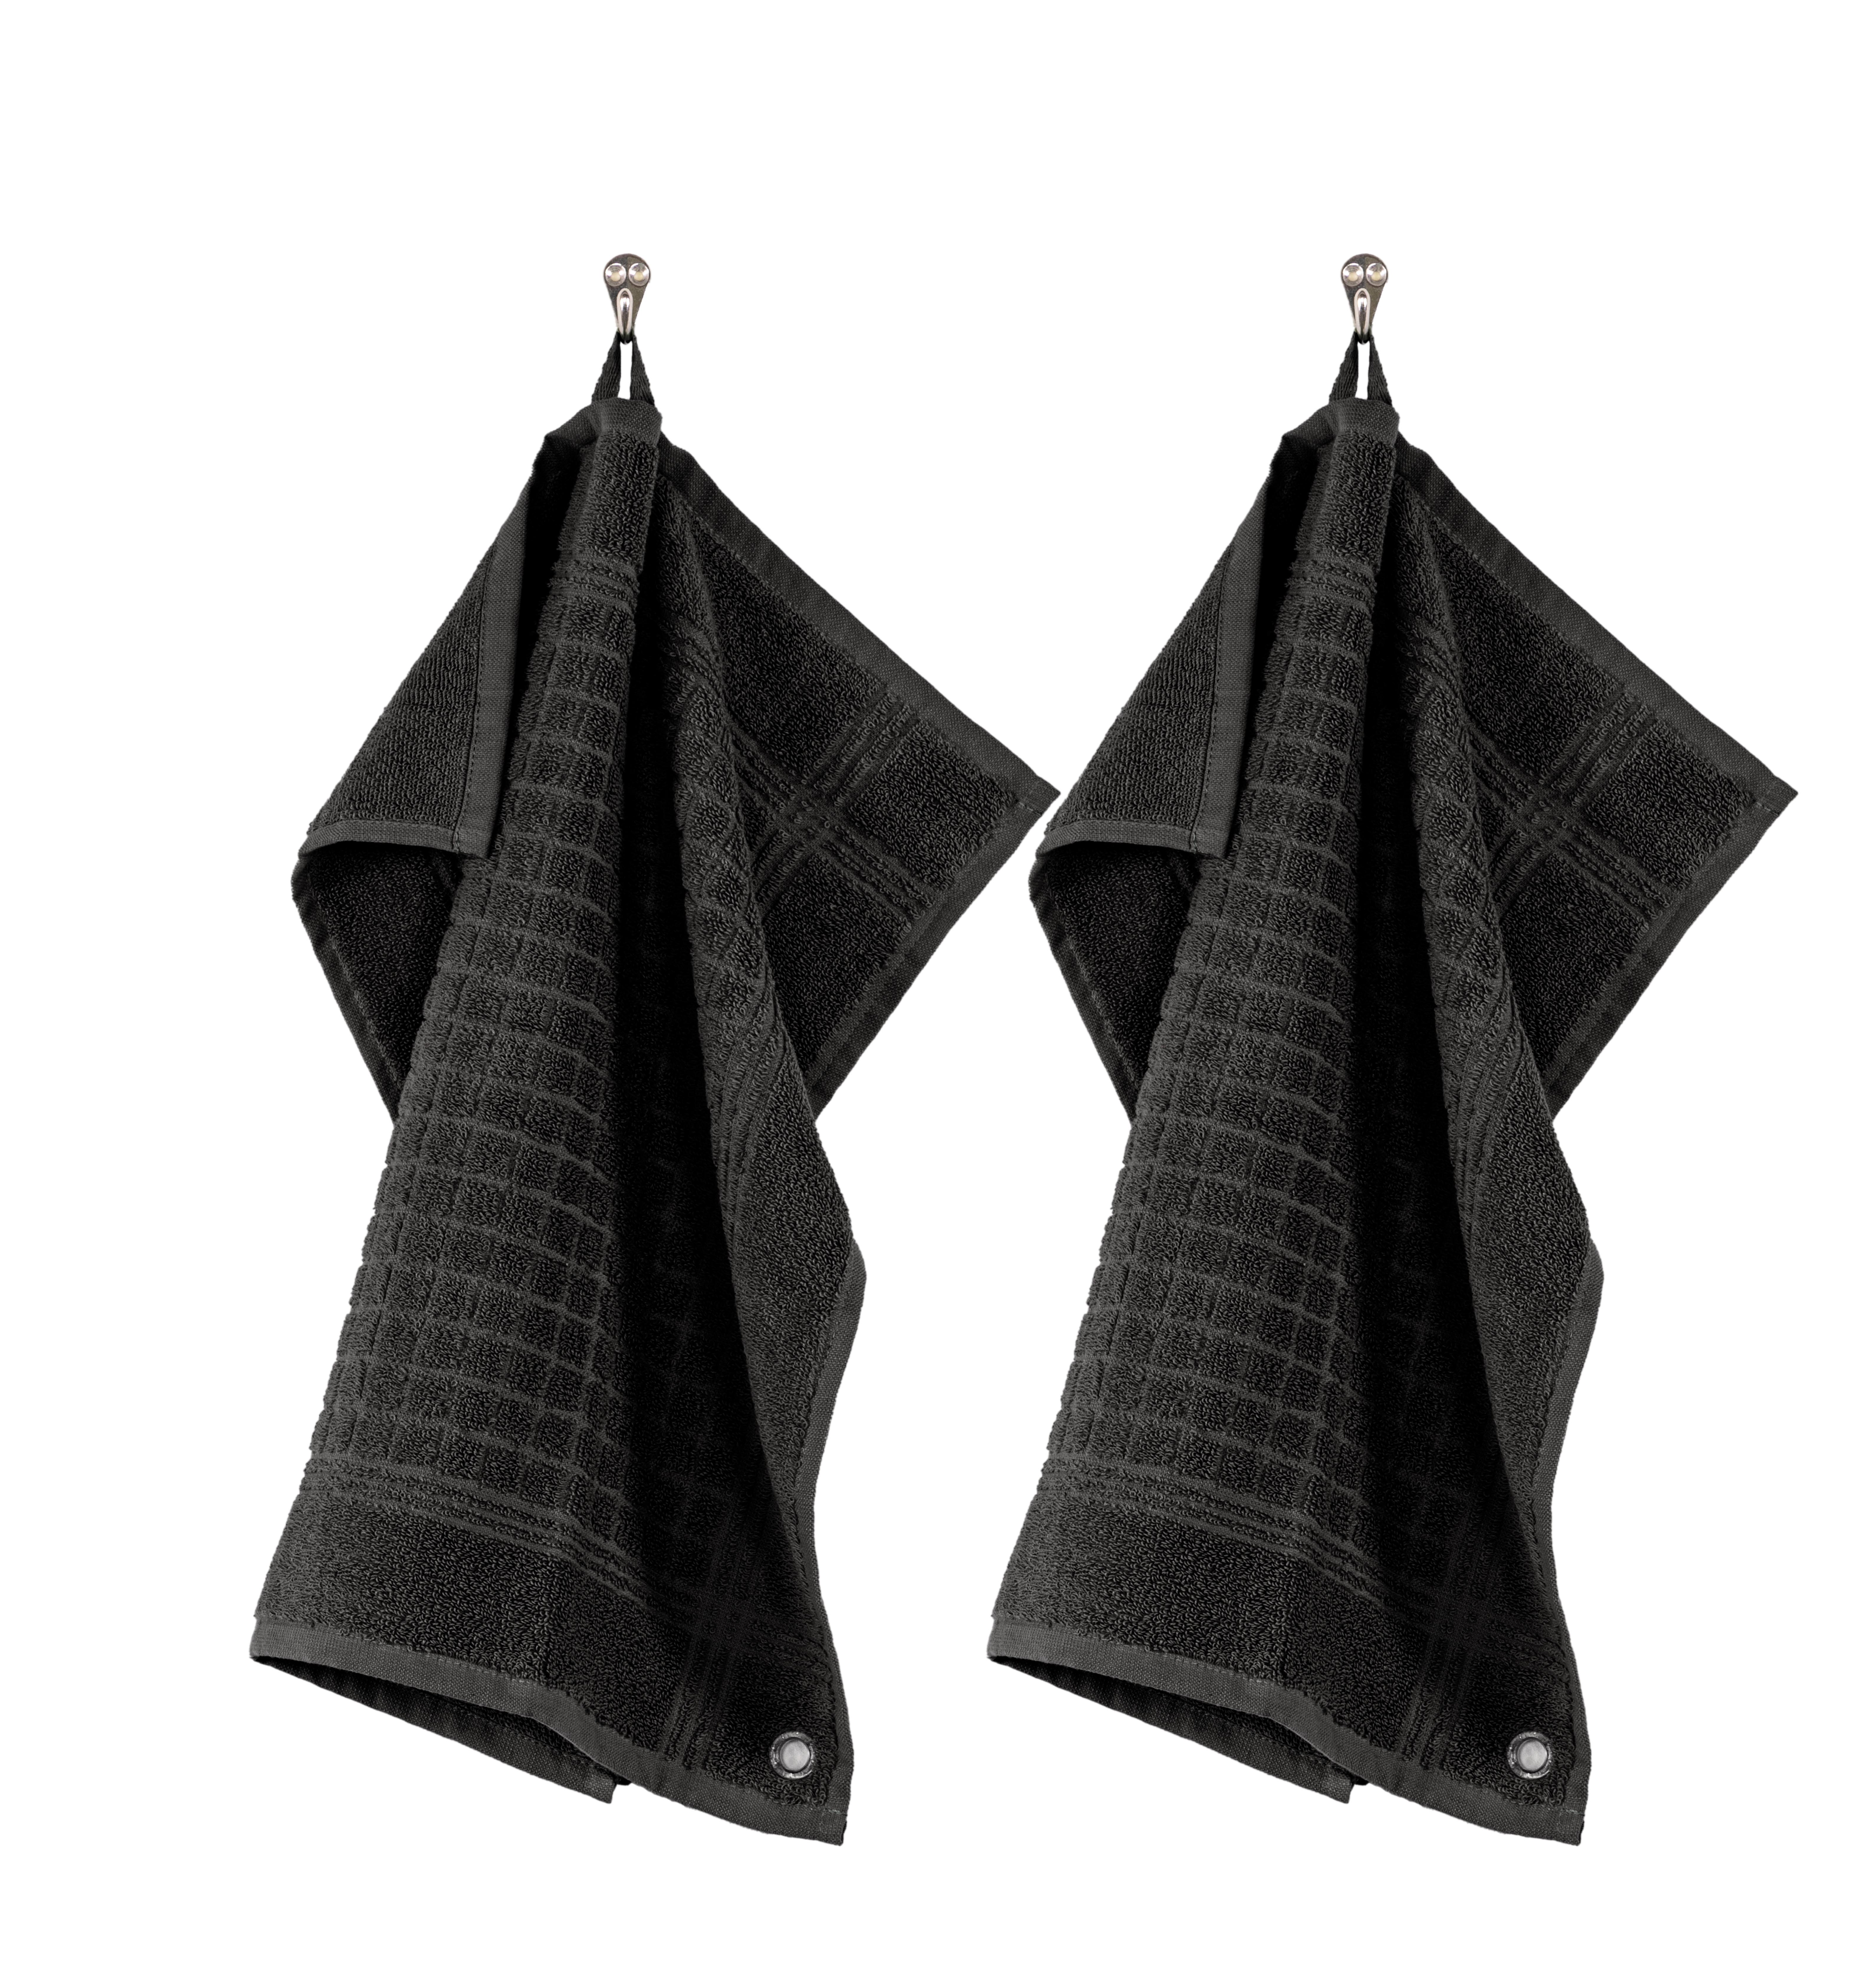 Square terry towel PHARAO 50x50 cm - set/2, black